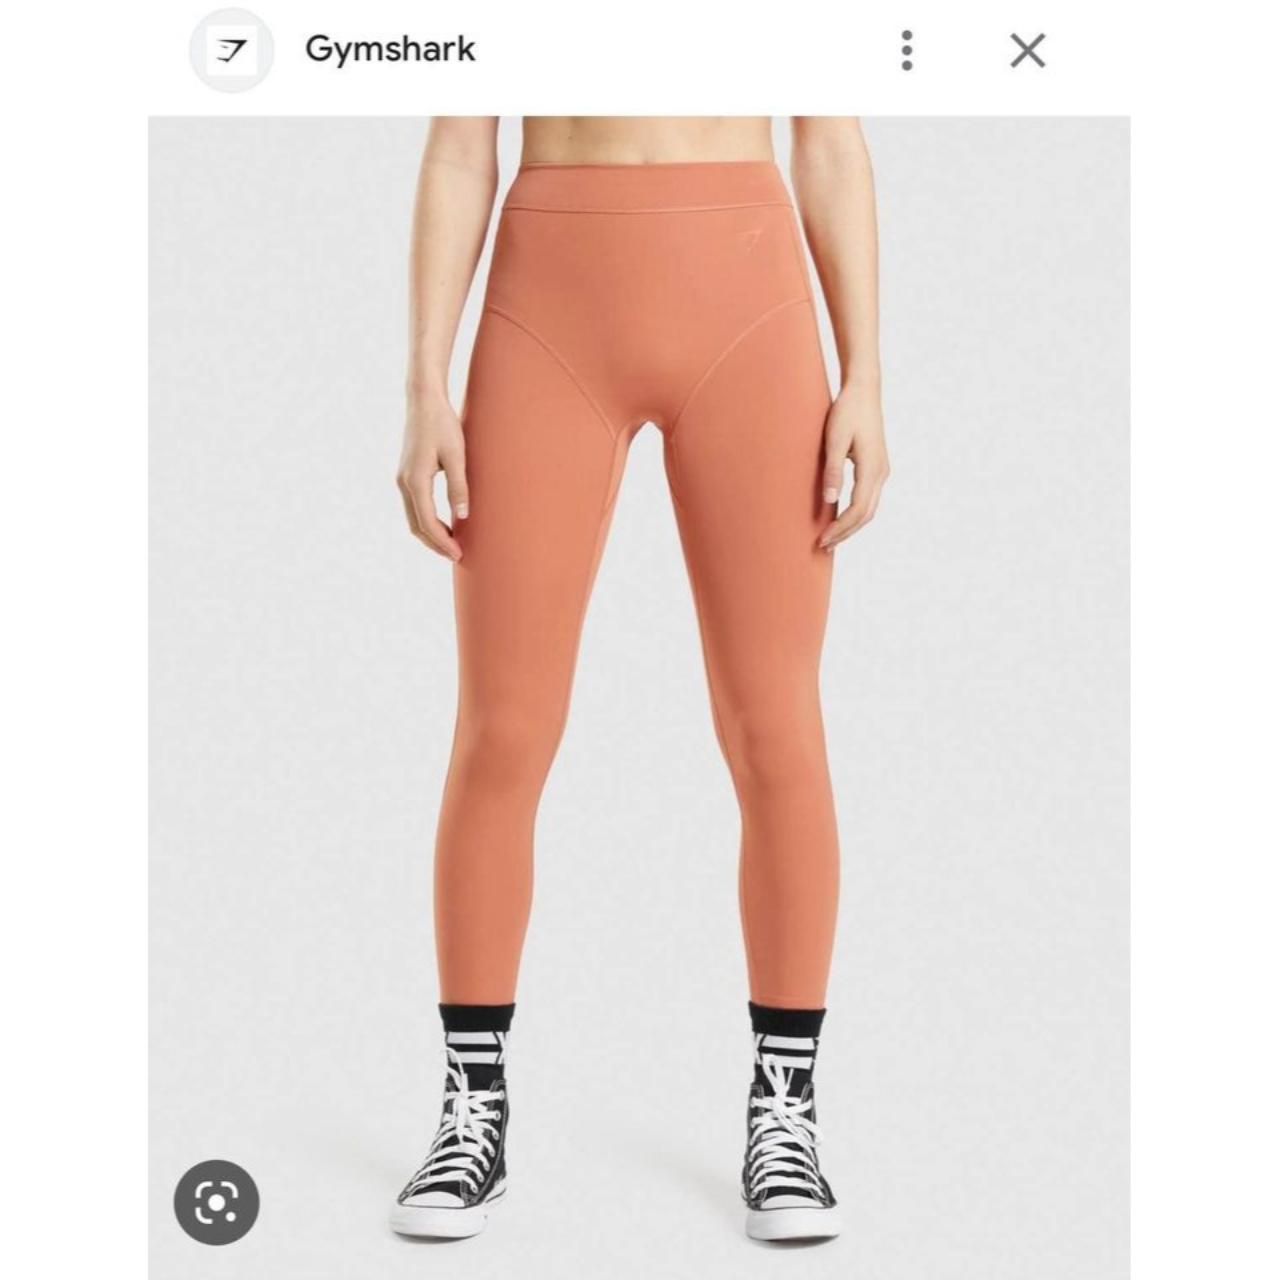 New Gymshark x KK Fit 7/8th leggings, size XL. My